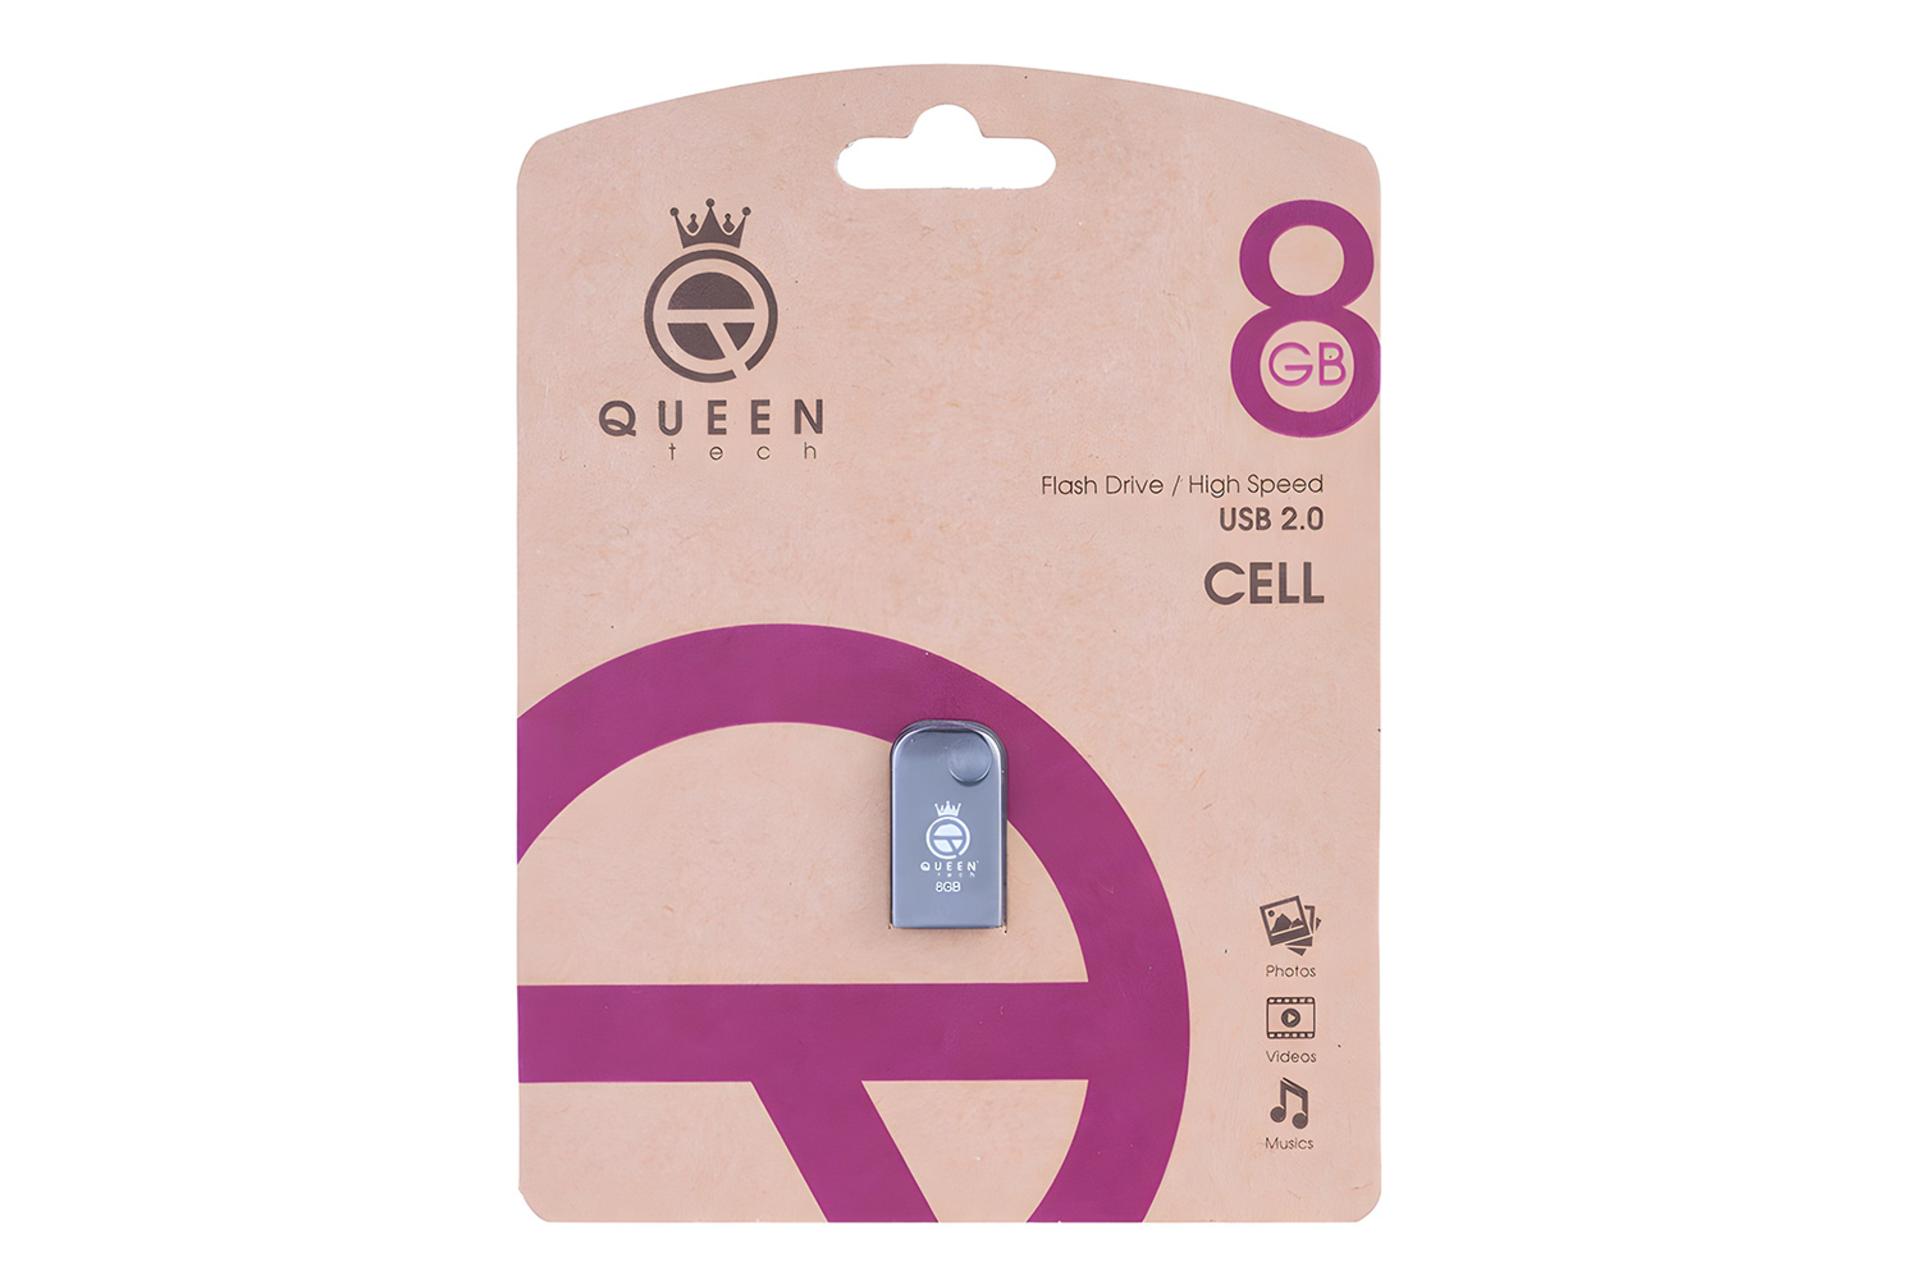 جعبه فلش مموری کوئین تک Queen Tech CELL 8GB USB 2.0